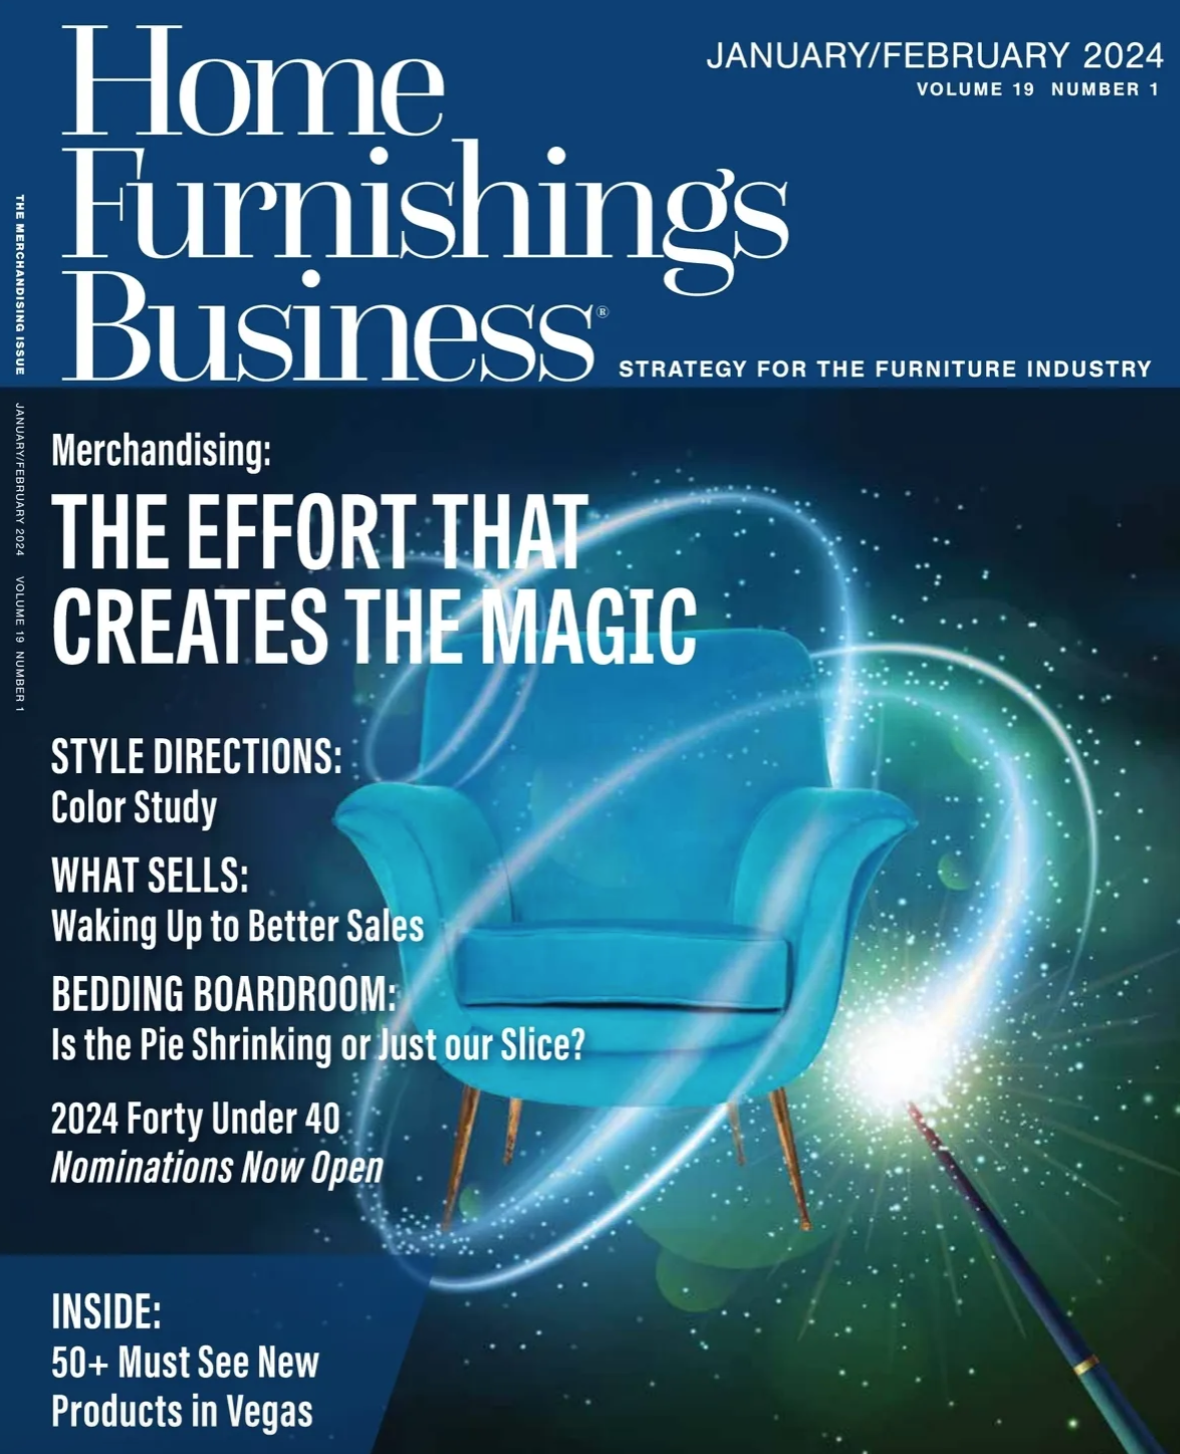 Home Furnishings Business Sept/Oct 2023 Magazine